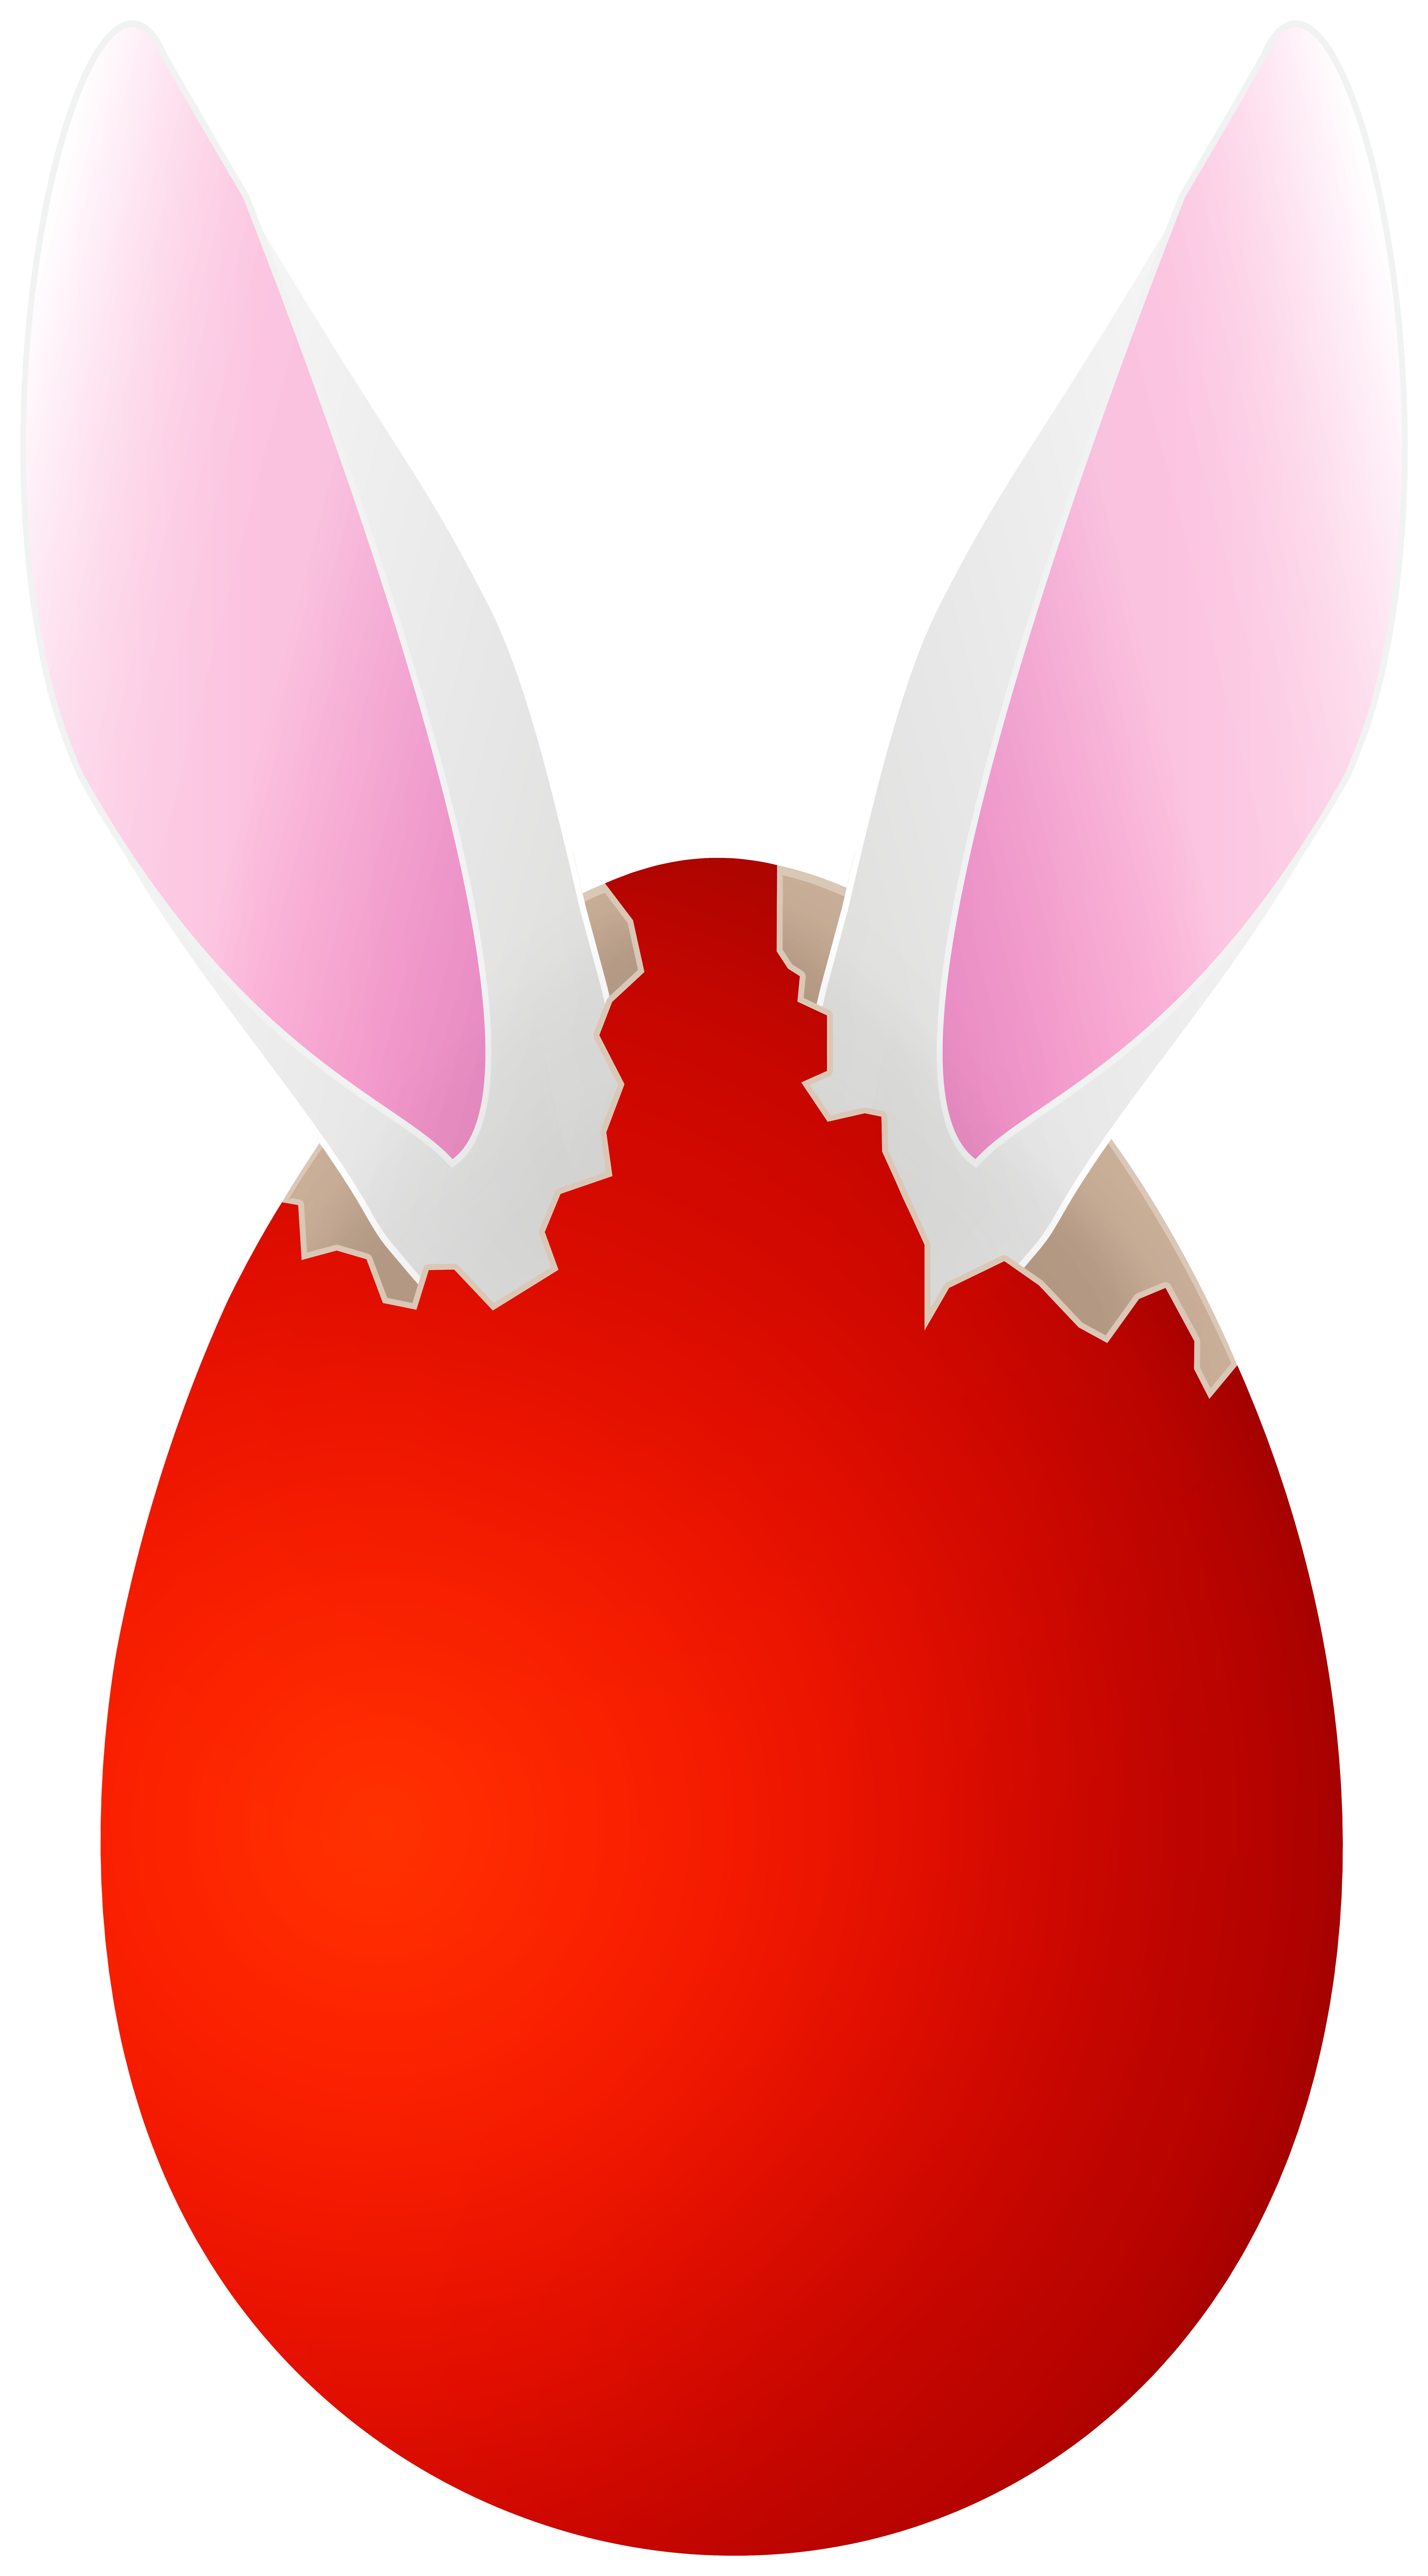 Red Easter Egg PNG Clip Art - Best WEB Clipart